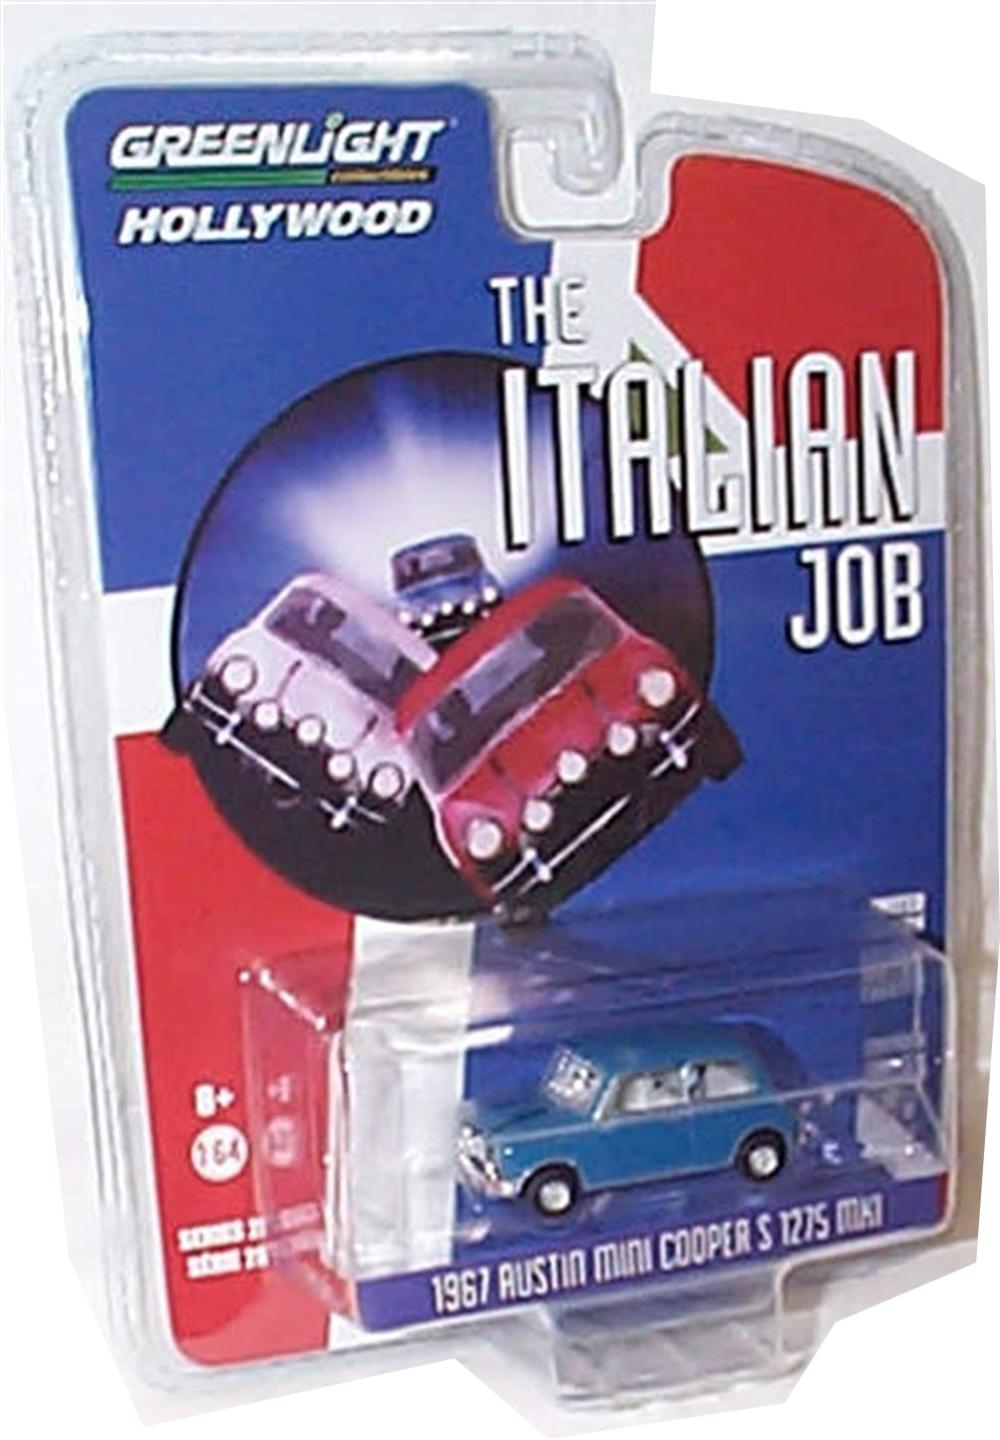 he Italian Job 1967 Austin Mini Cooper S 1275 mk1 in blue